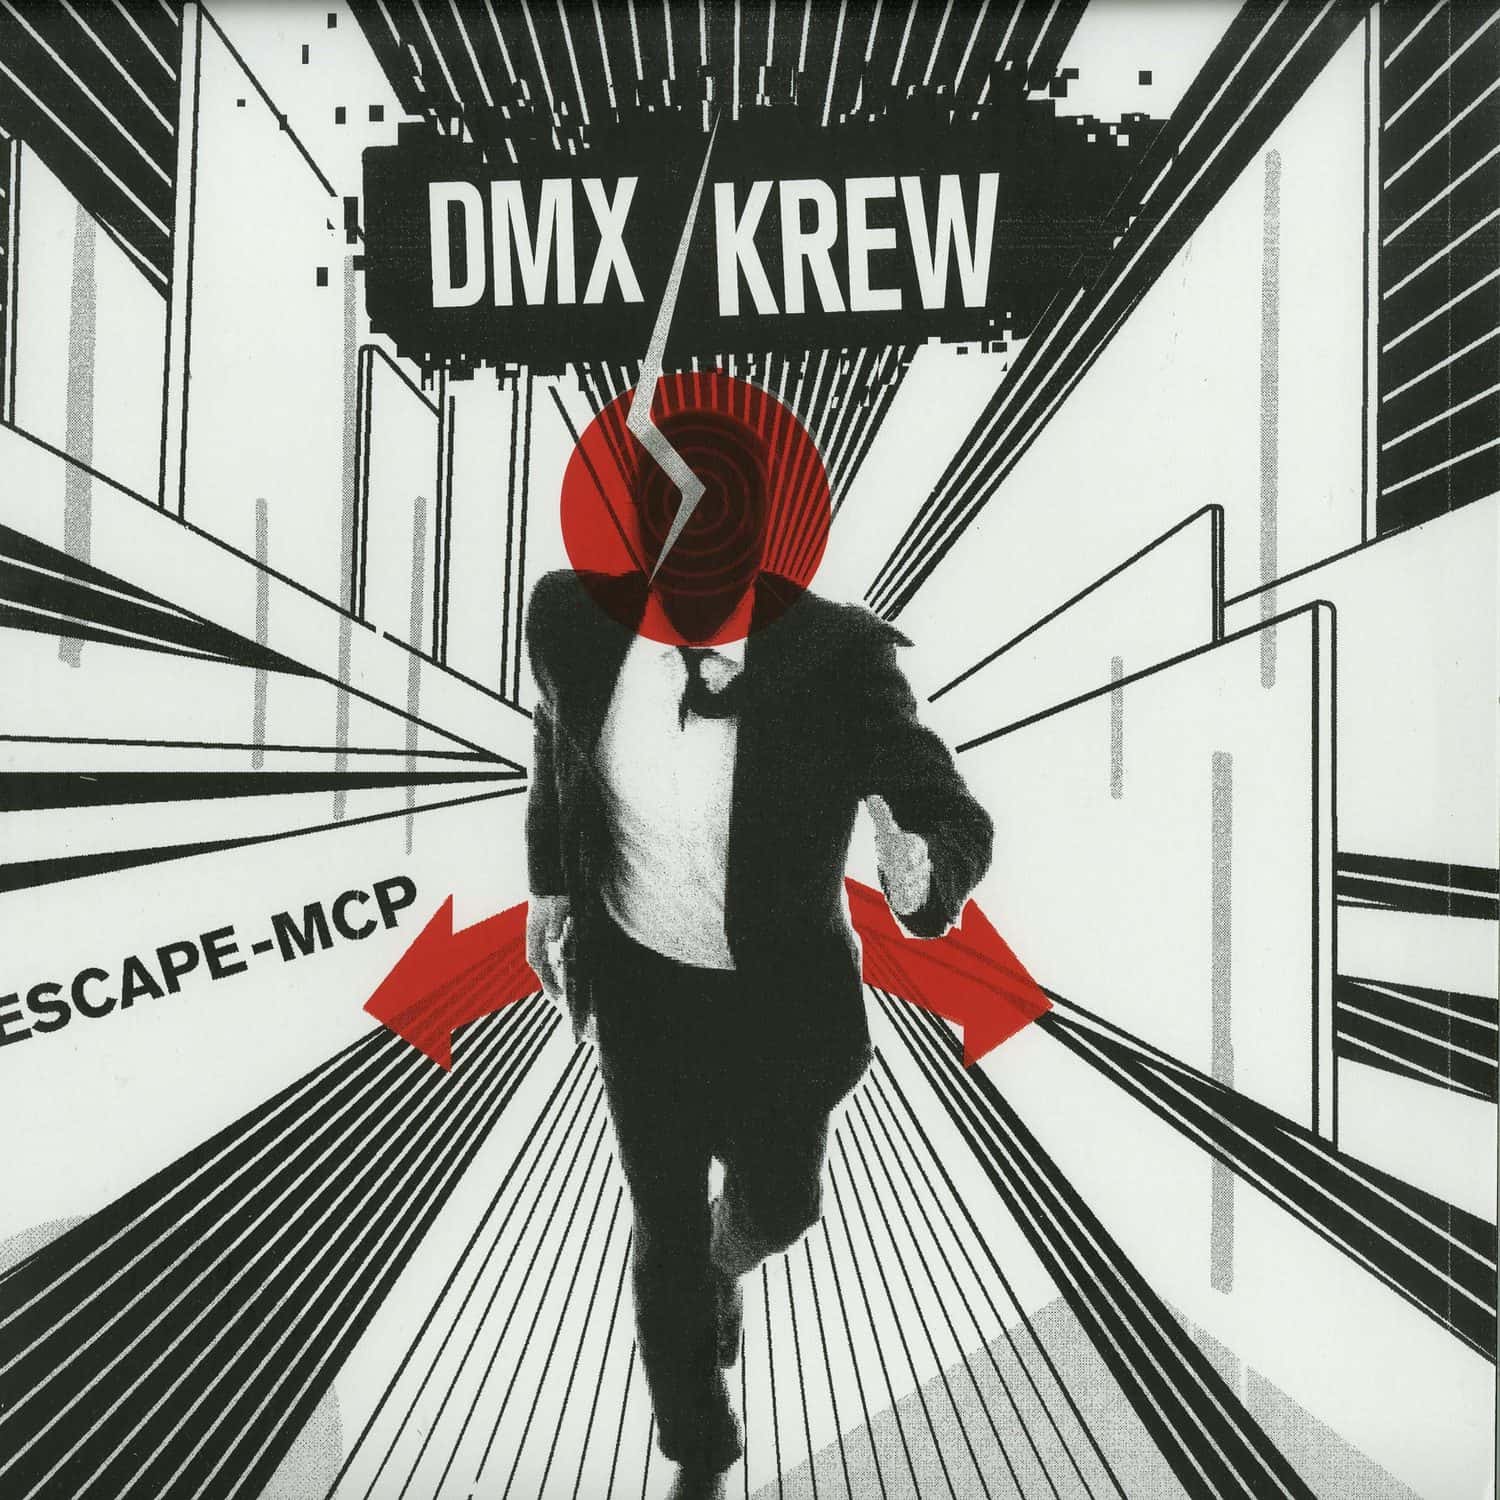 DMX Krew - ESCAPEMCP 